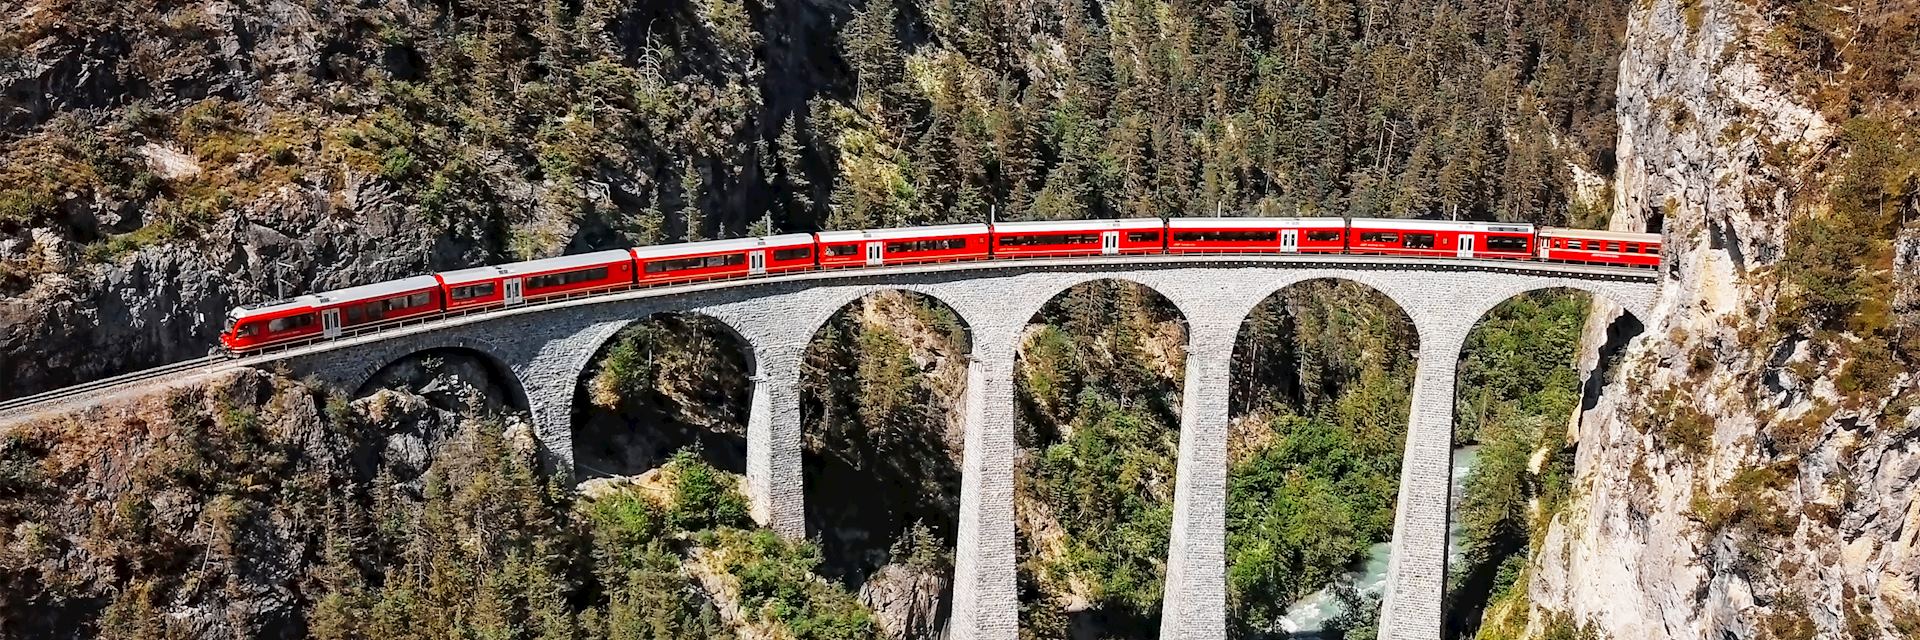 Glacier Express passing over the Landwasser Viaduct, Switzerland